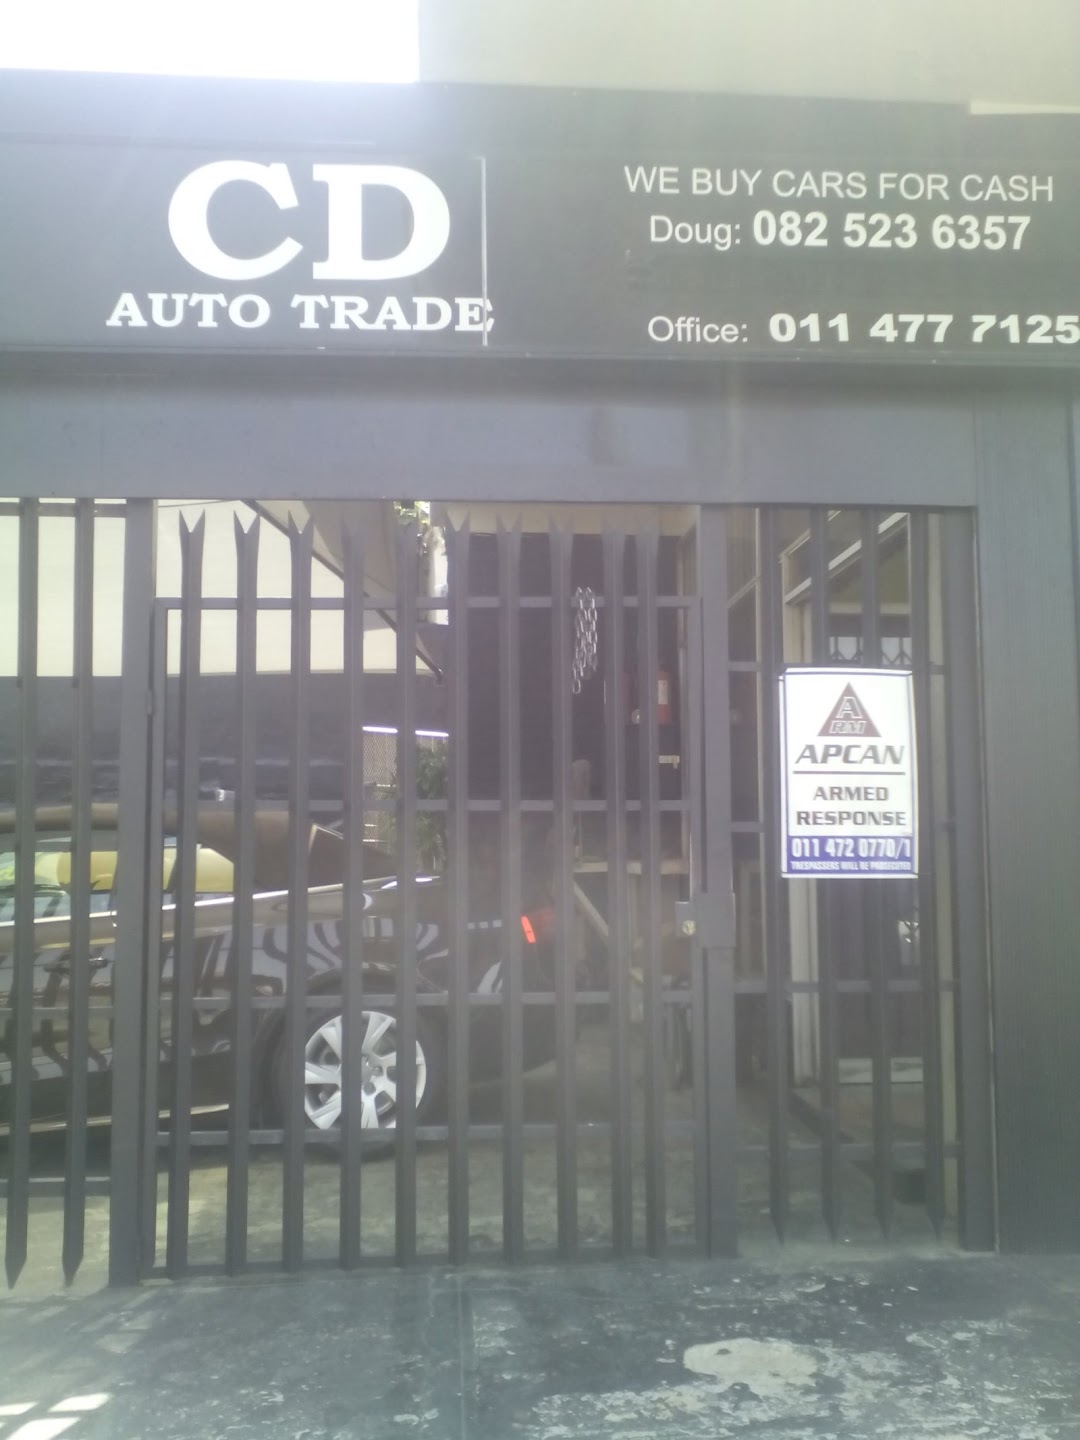 CD Auto Trade